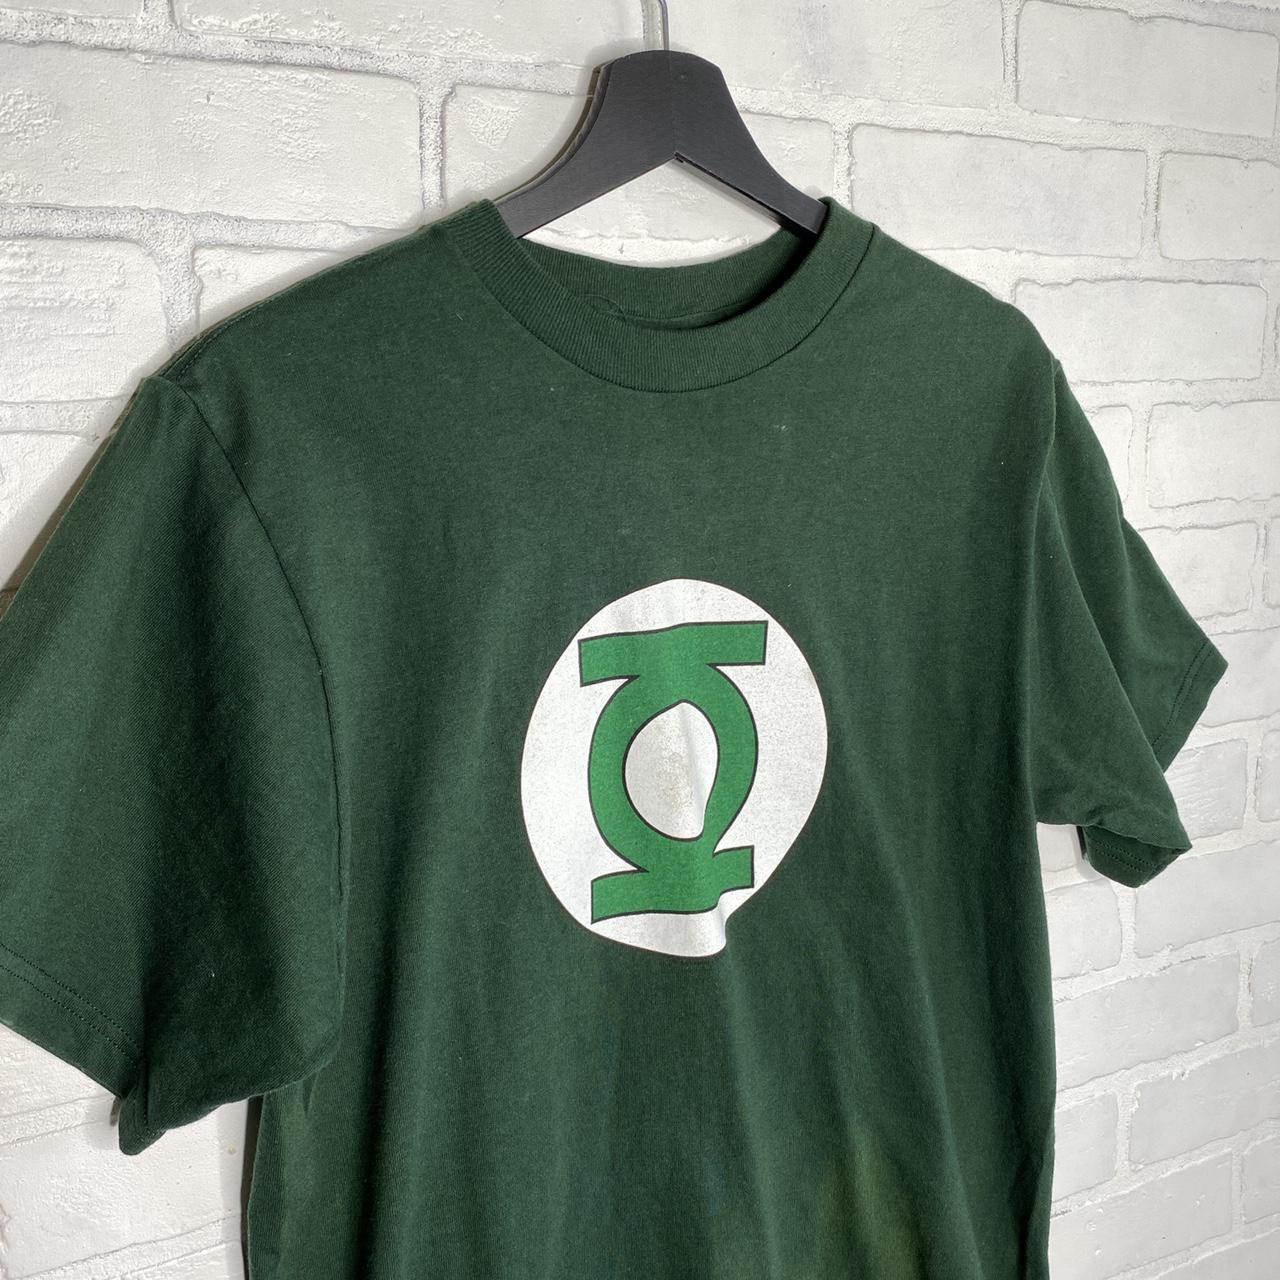 Vintage Green Lantern DC Comics Shirt Medium Super... - Depop